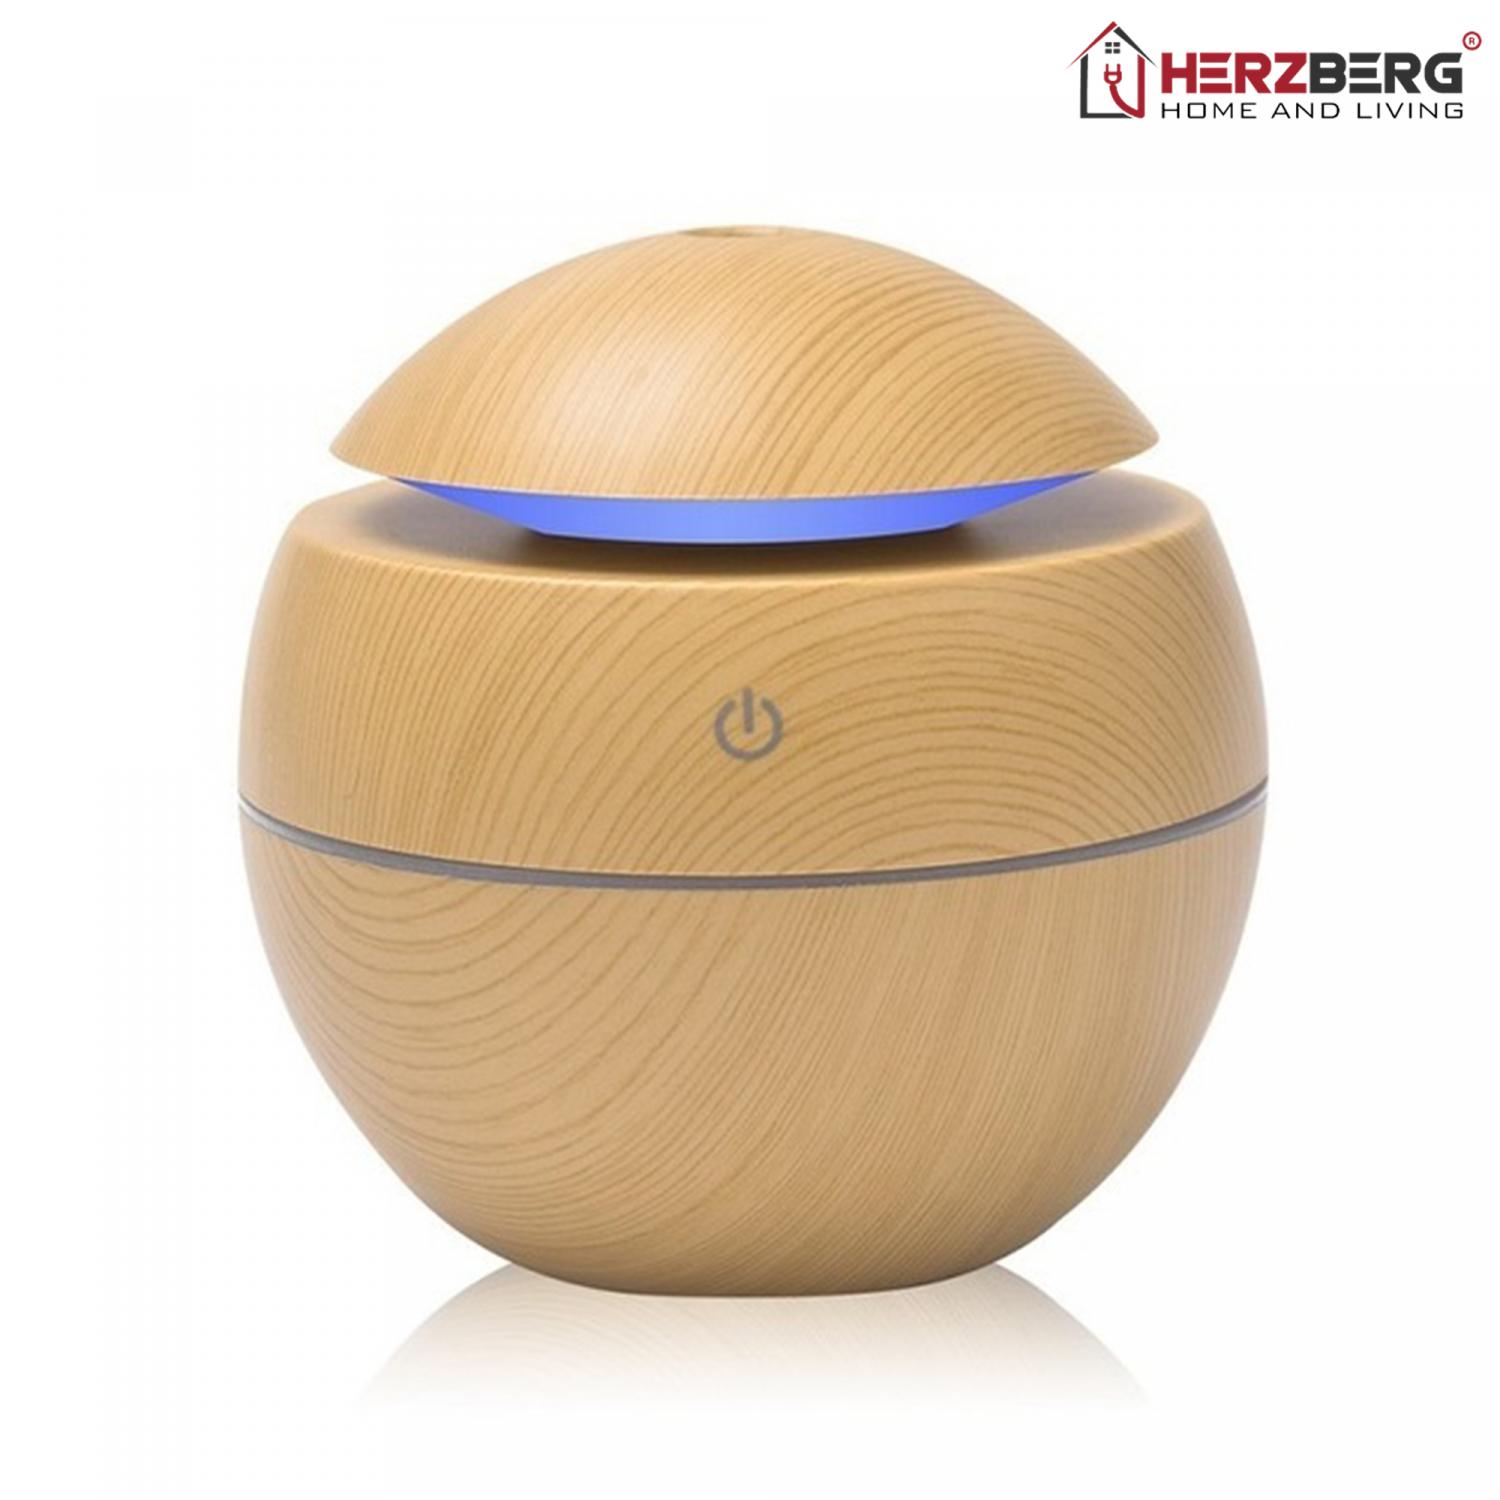 Herzberg Air Humidifier Aroma Oil Diffuser